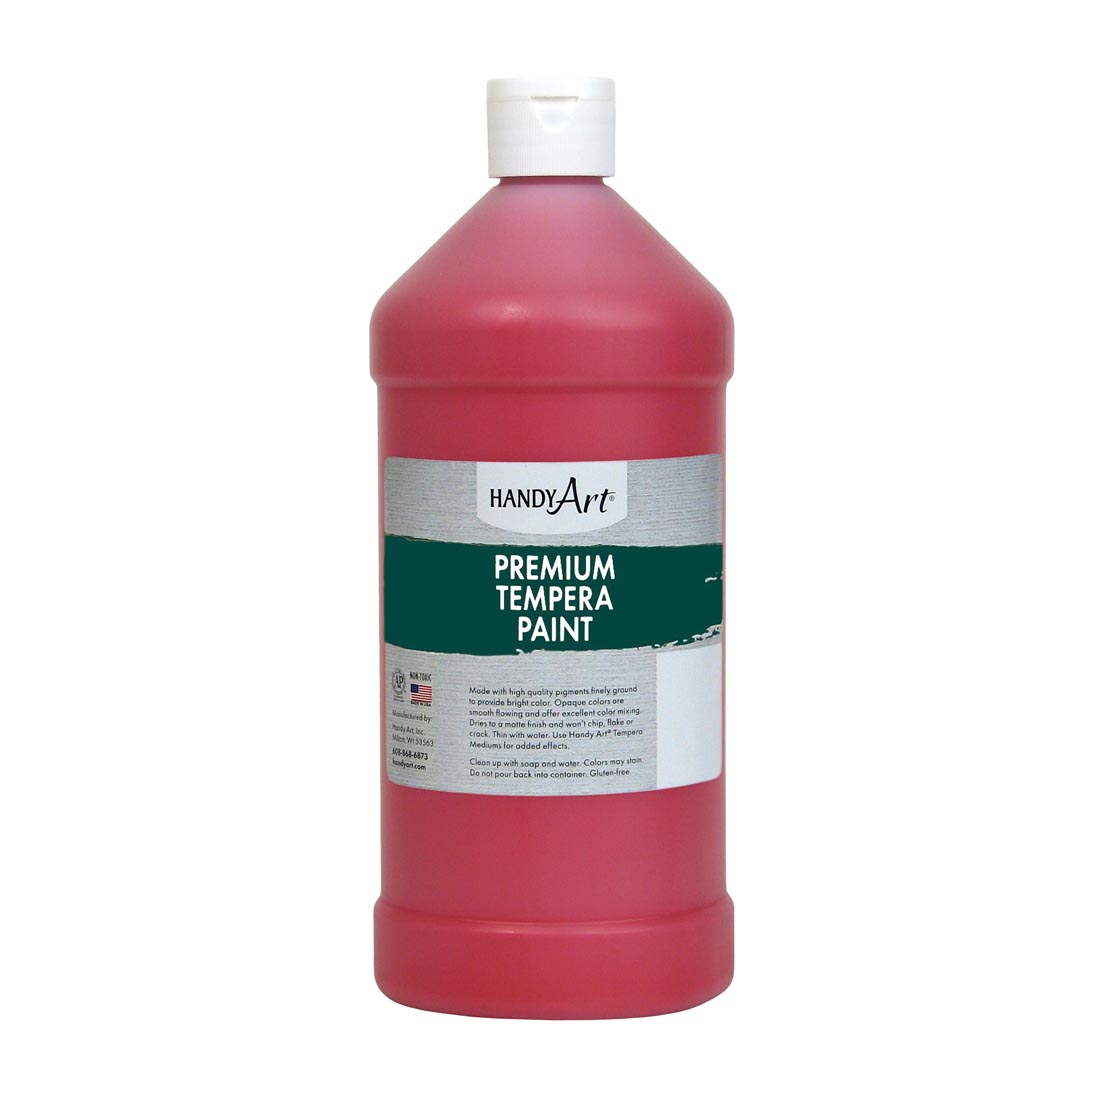 Quart bottle of Red Handy Art Premium Tempera Paint